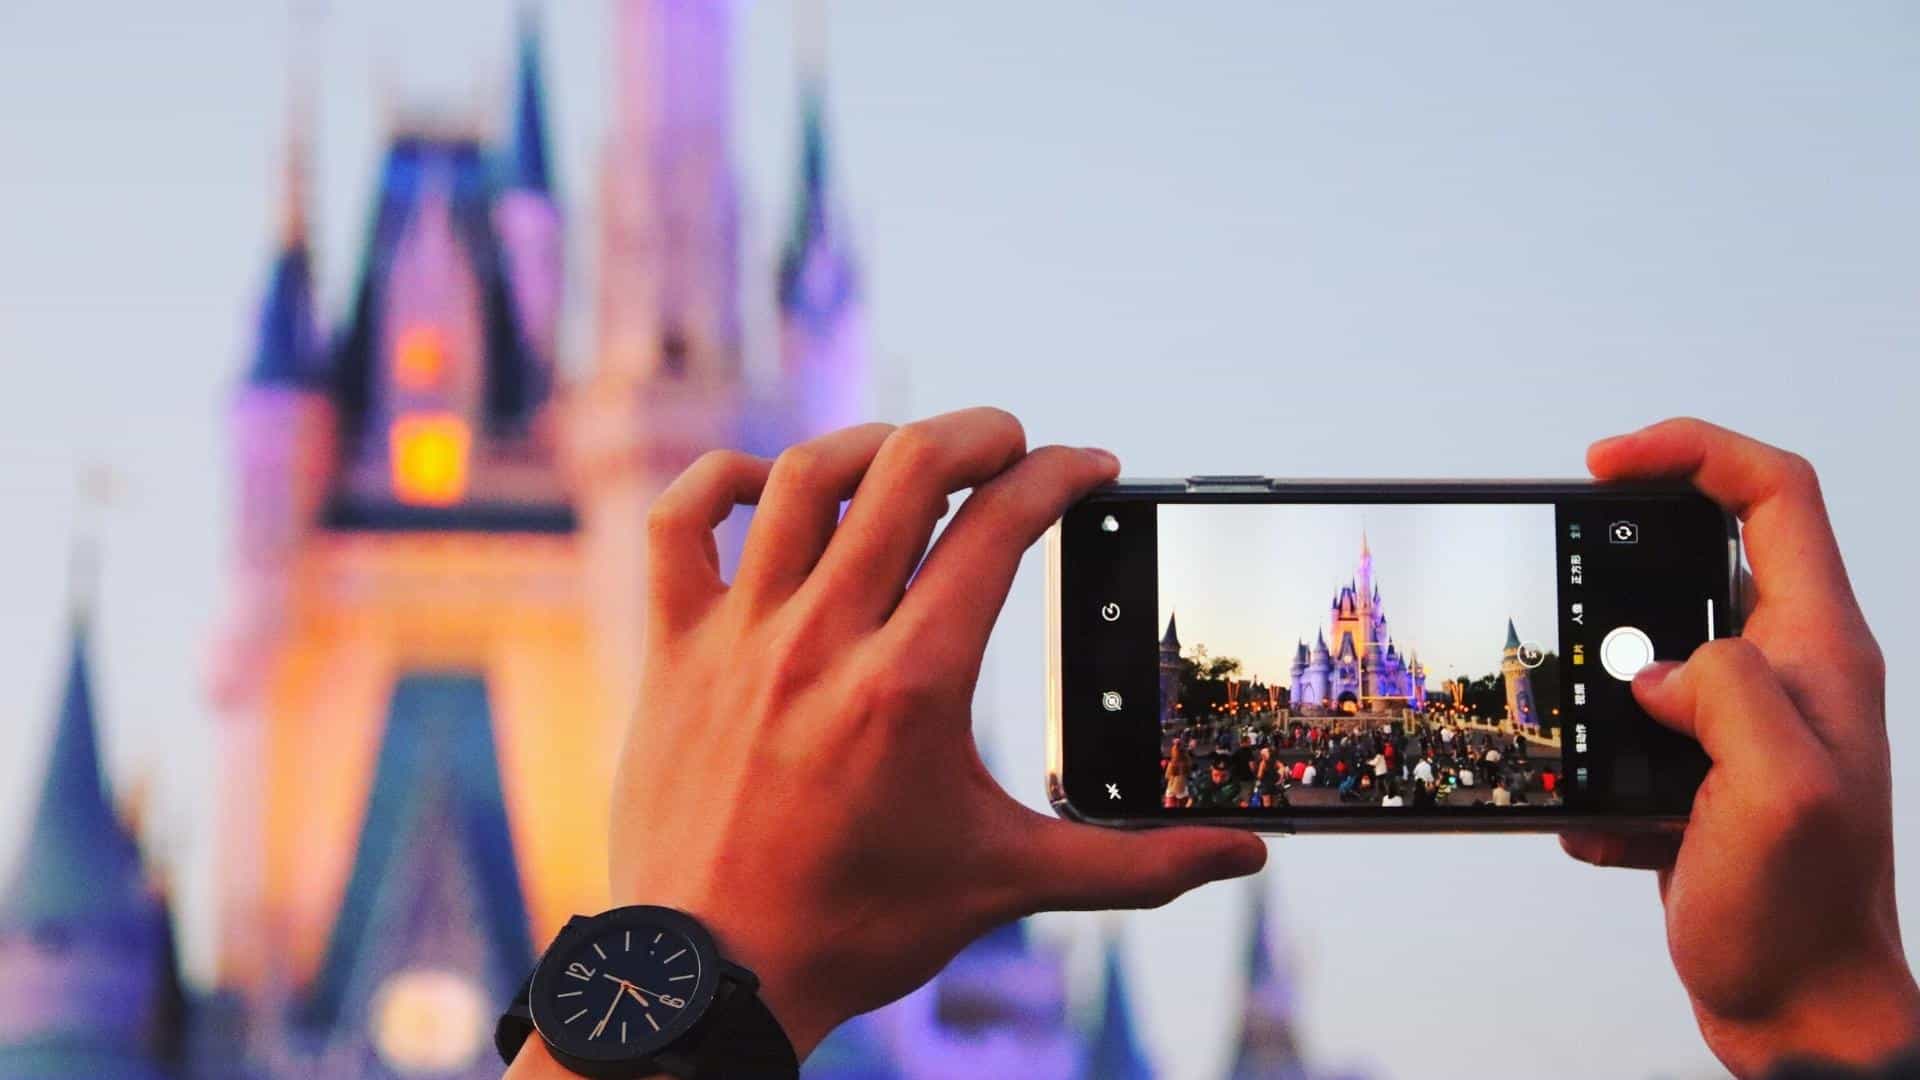 Sunset in Orlando at Disney World - Cinderella Castle